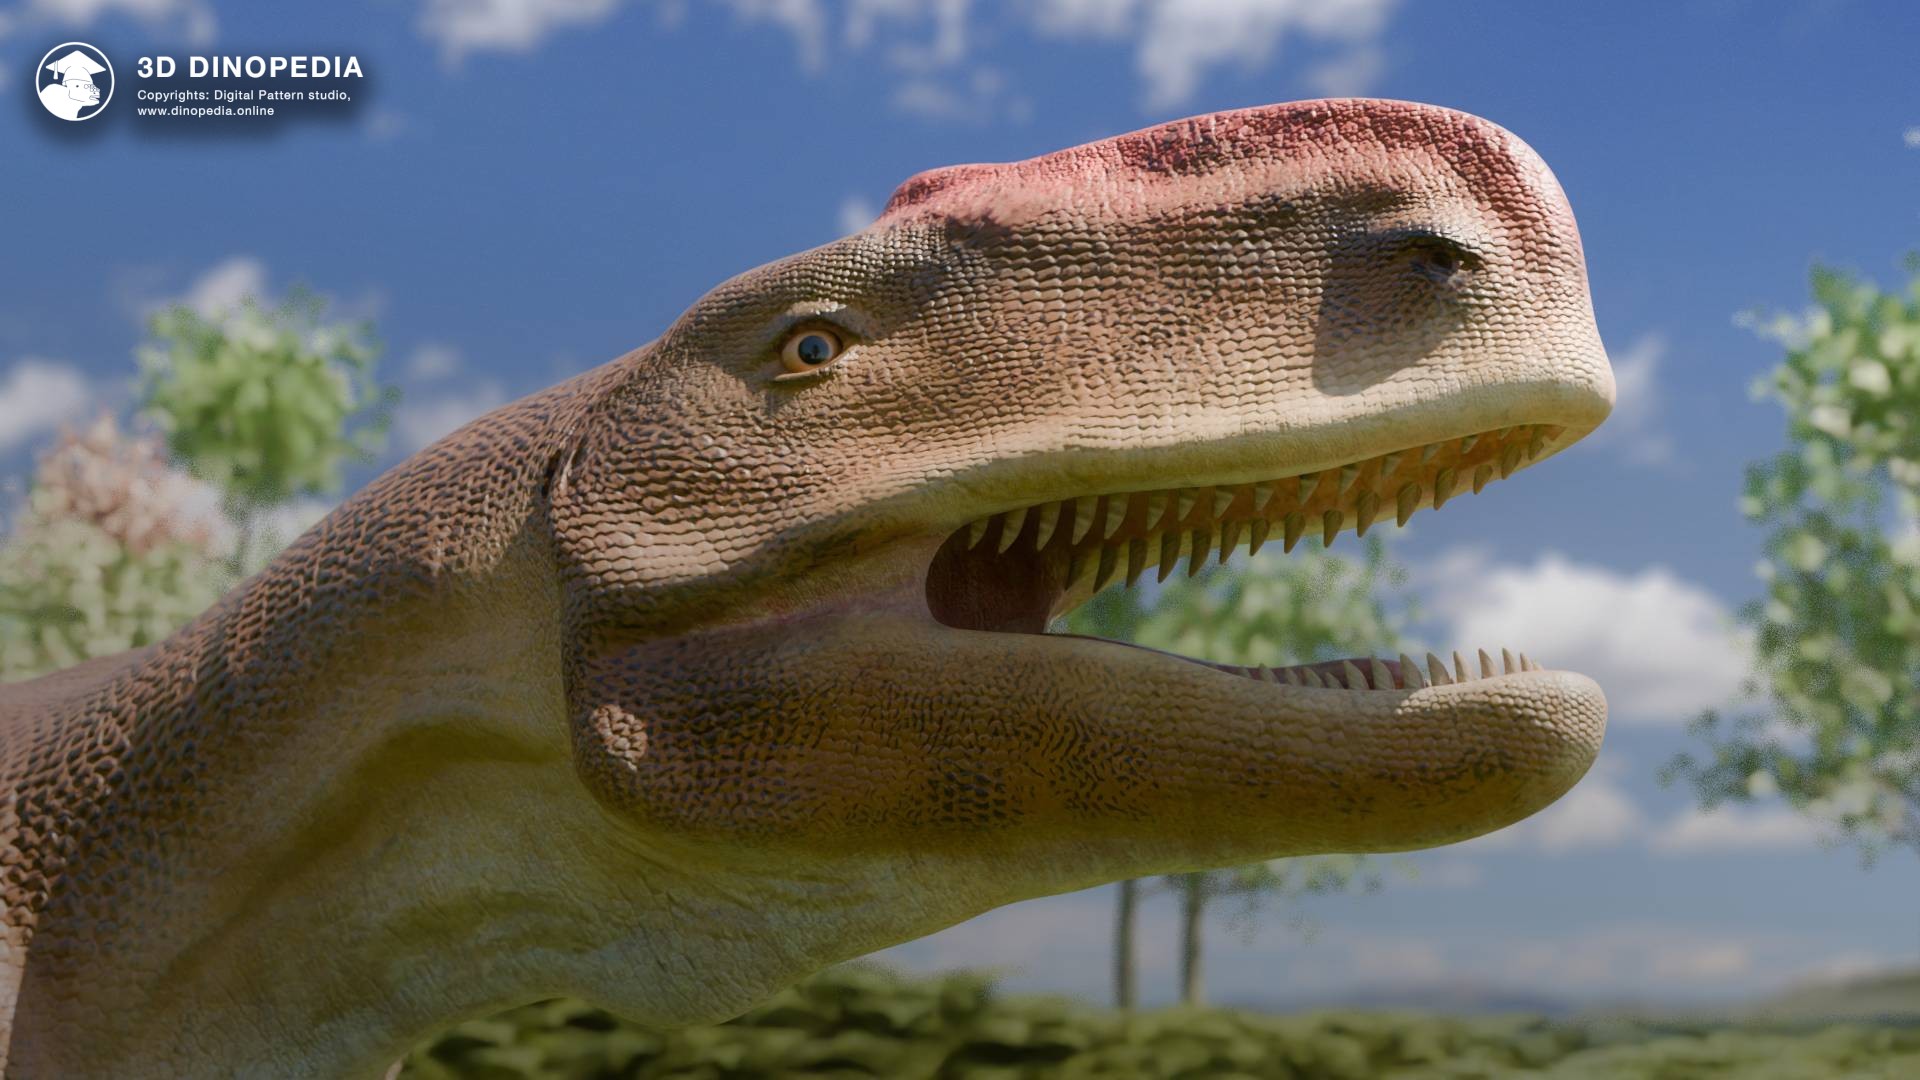 3D Dinopedia New 3D Cronopio & Dino Update!